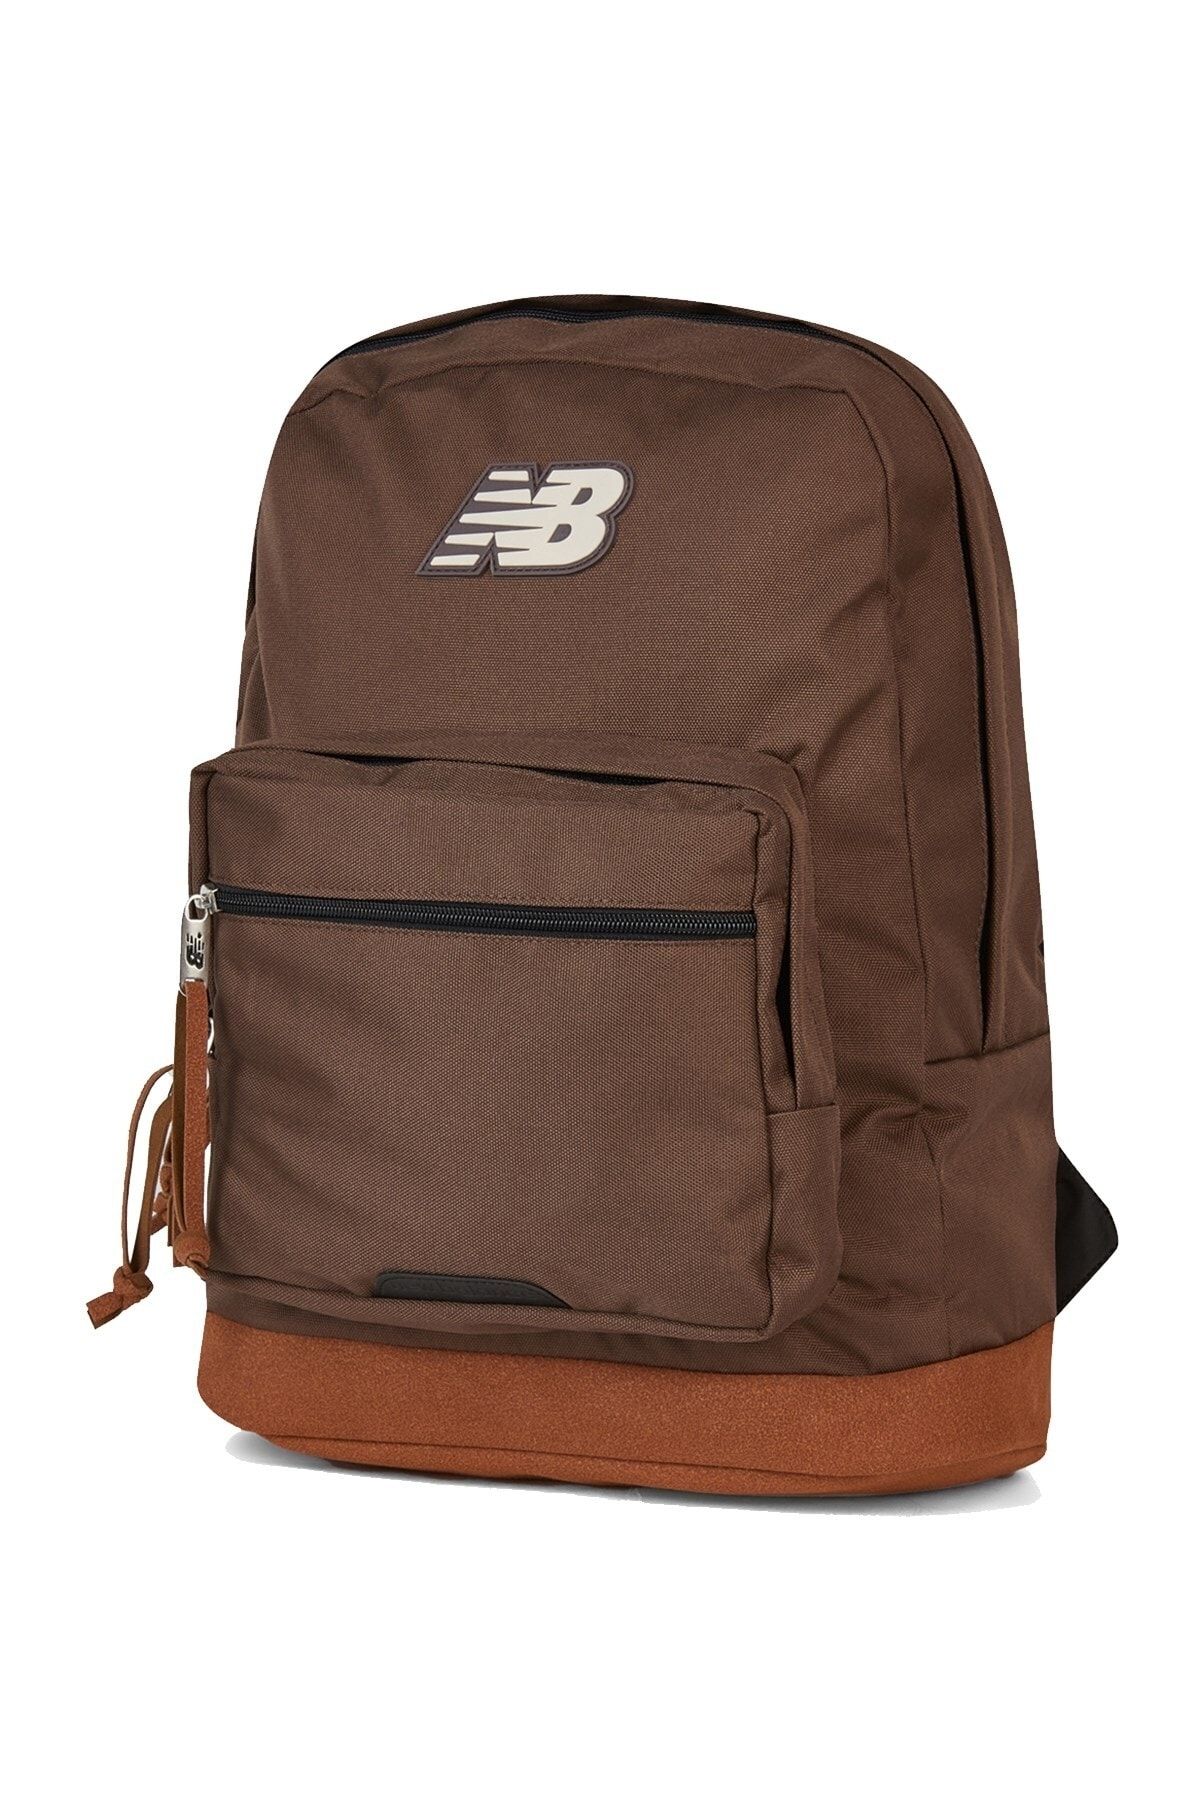 New Balance Nb Backpack Sırt Çantası Anb3202-brw